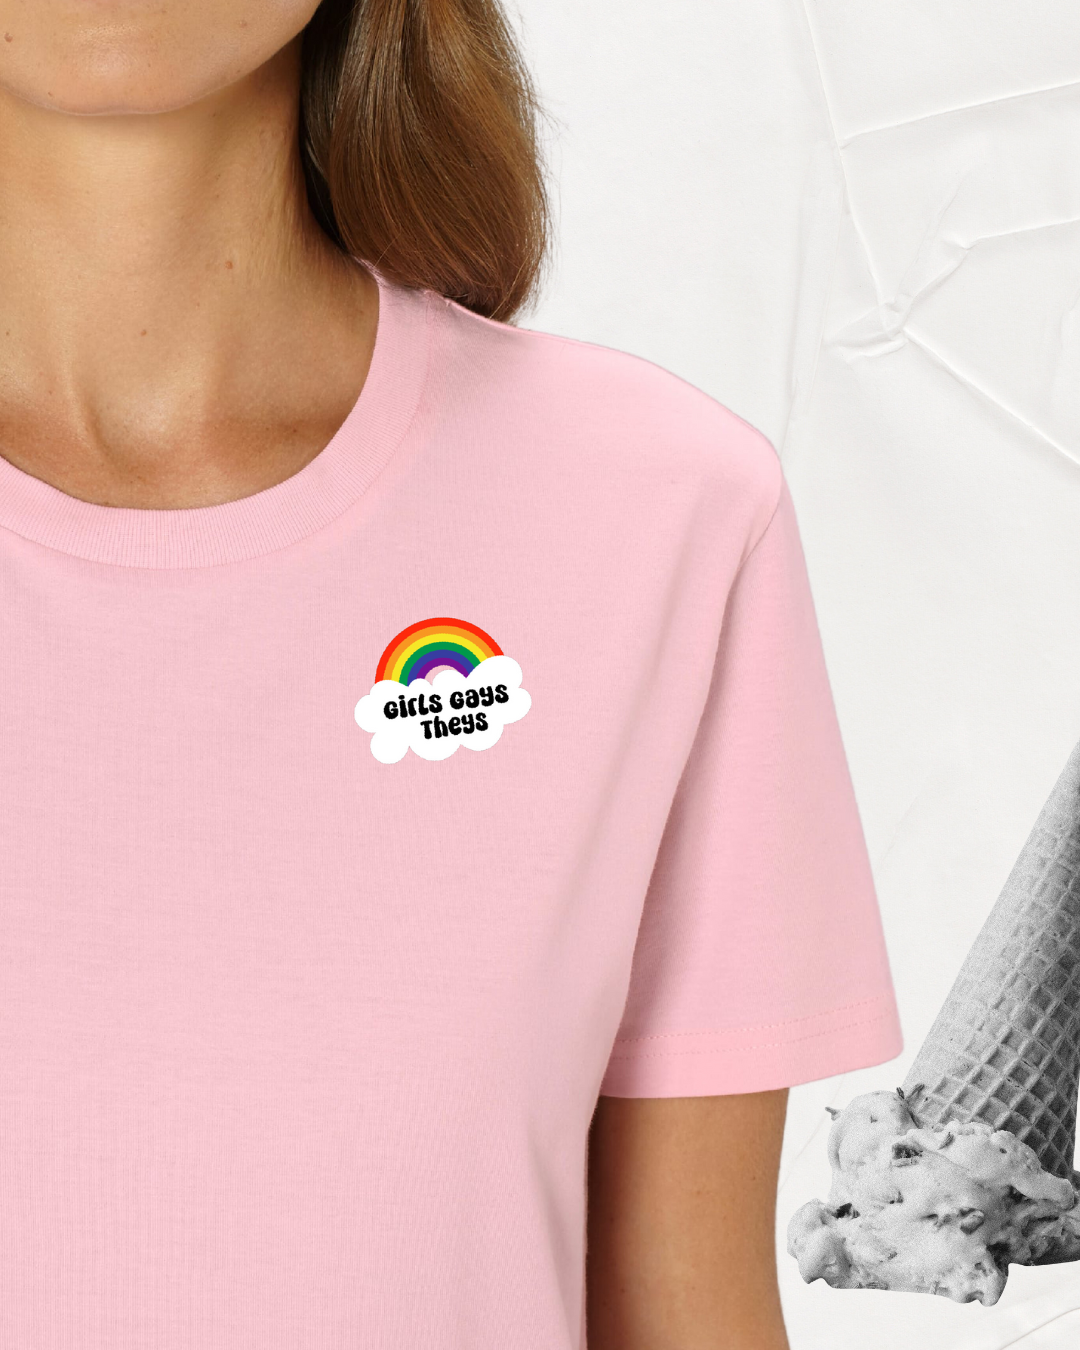 Girls Gays Theys | Unisex Shirt